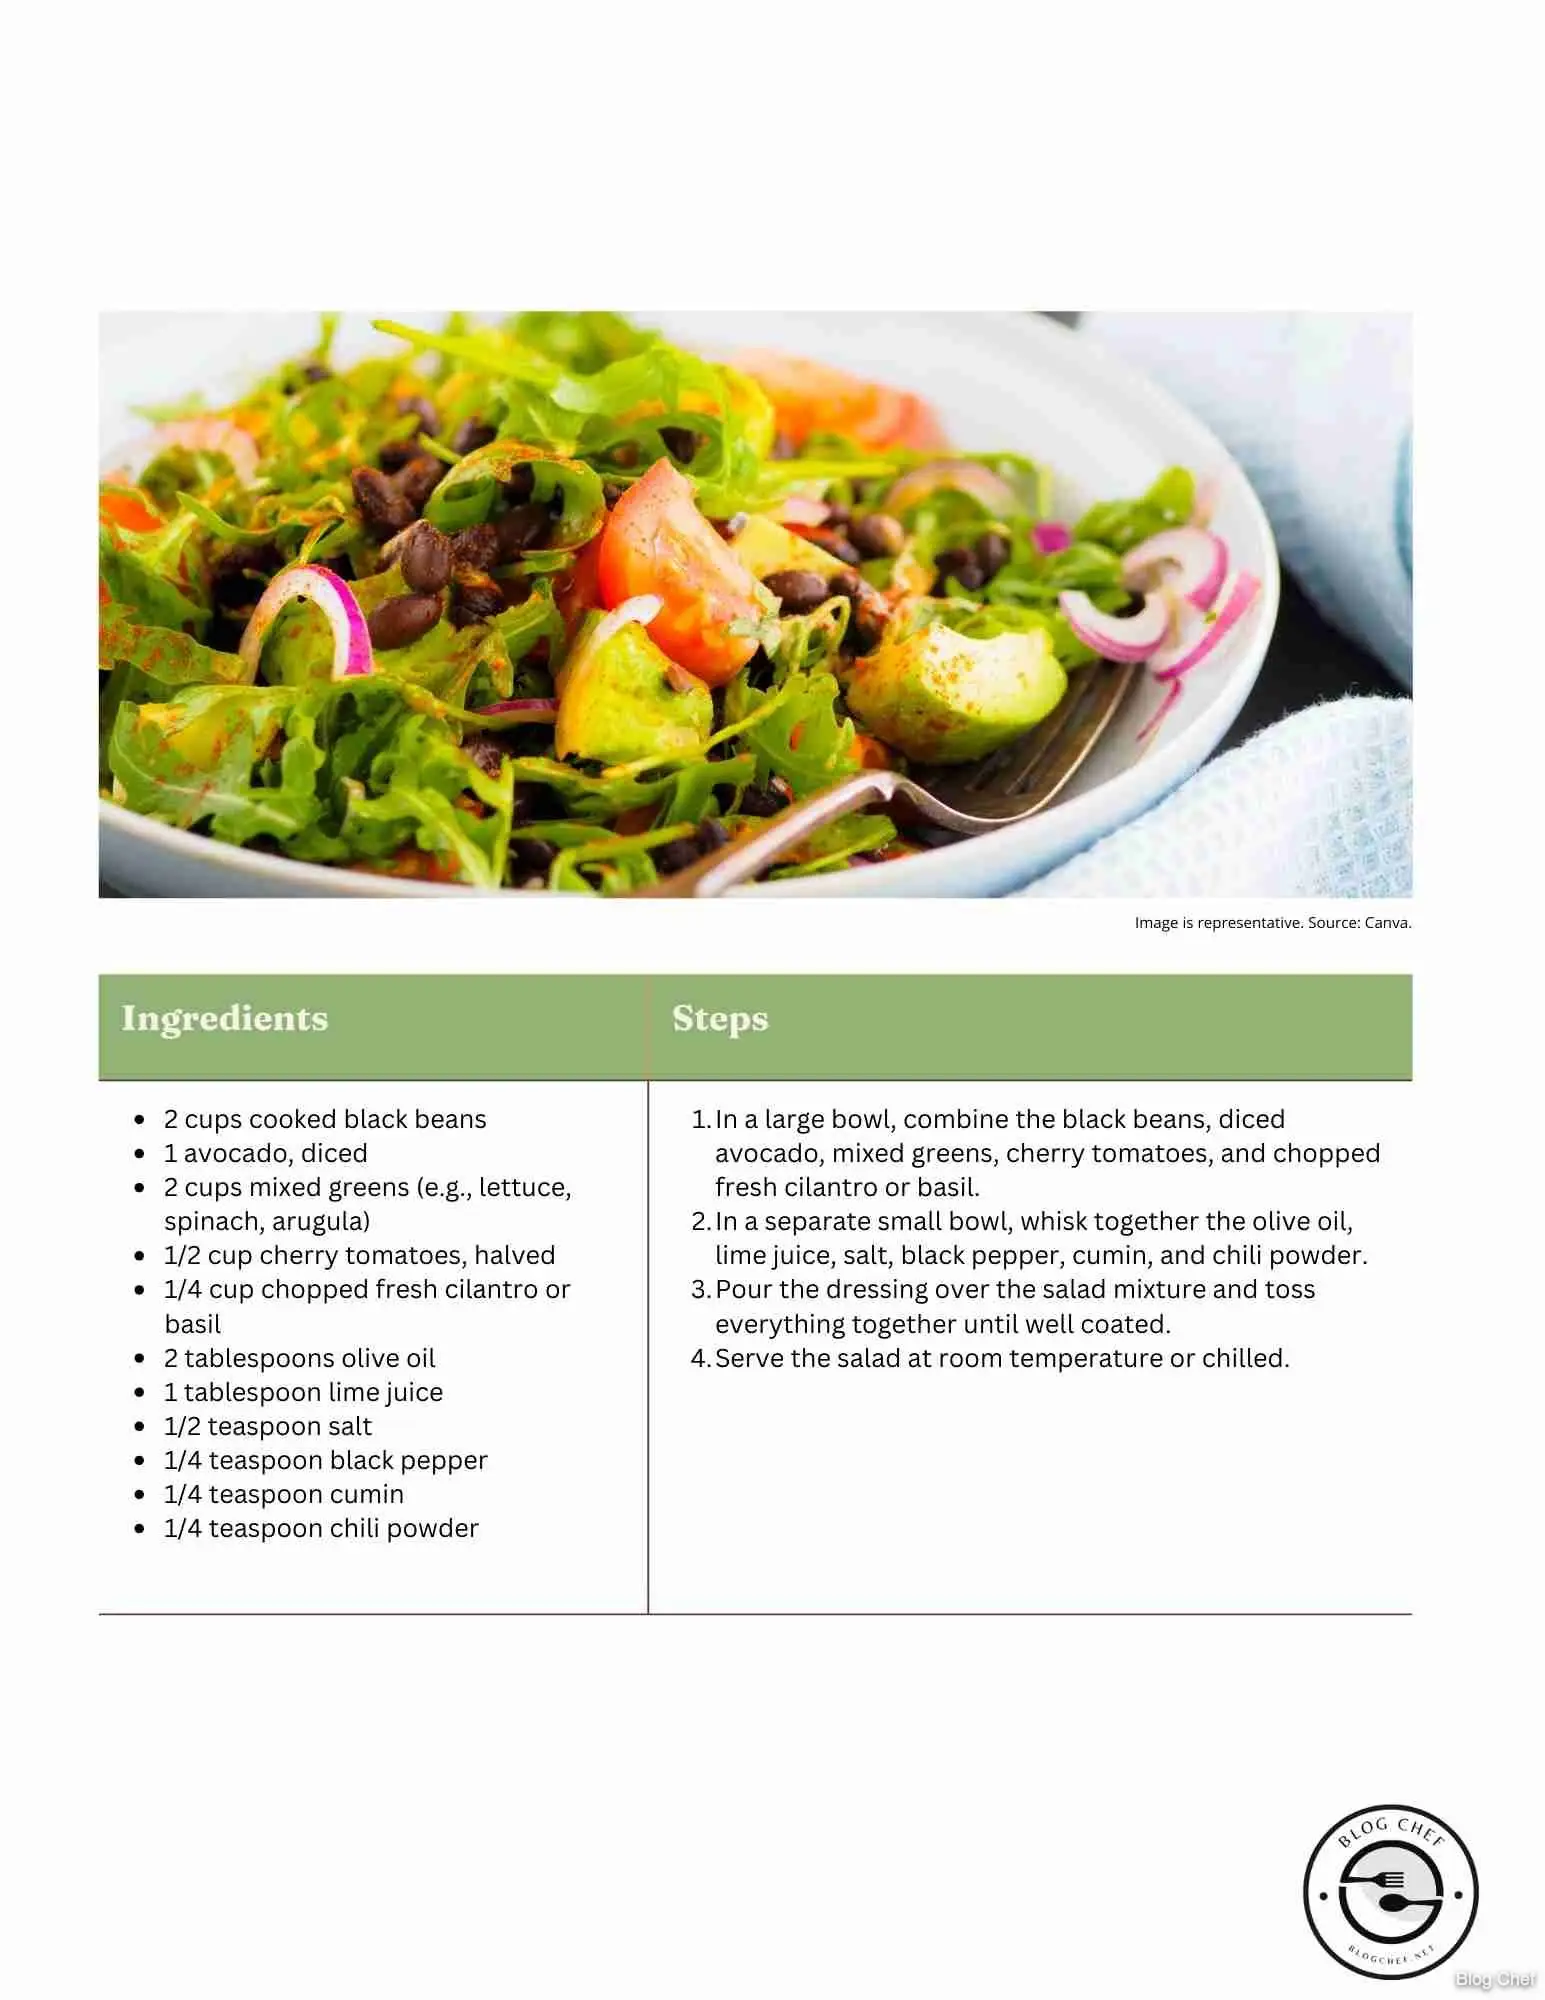 Recipe card for black bean and avocado salad.